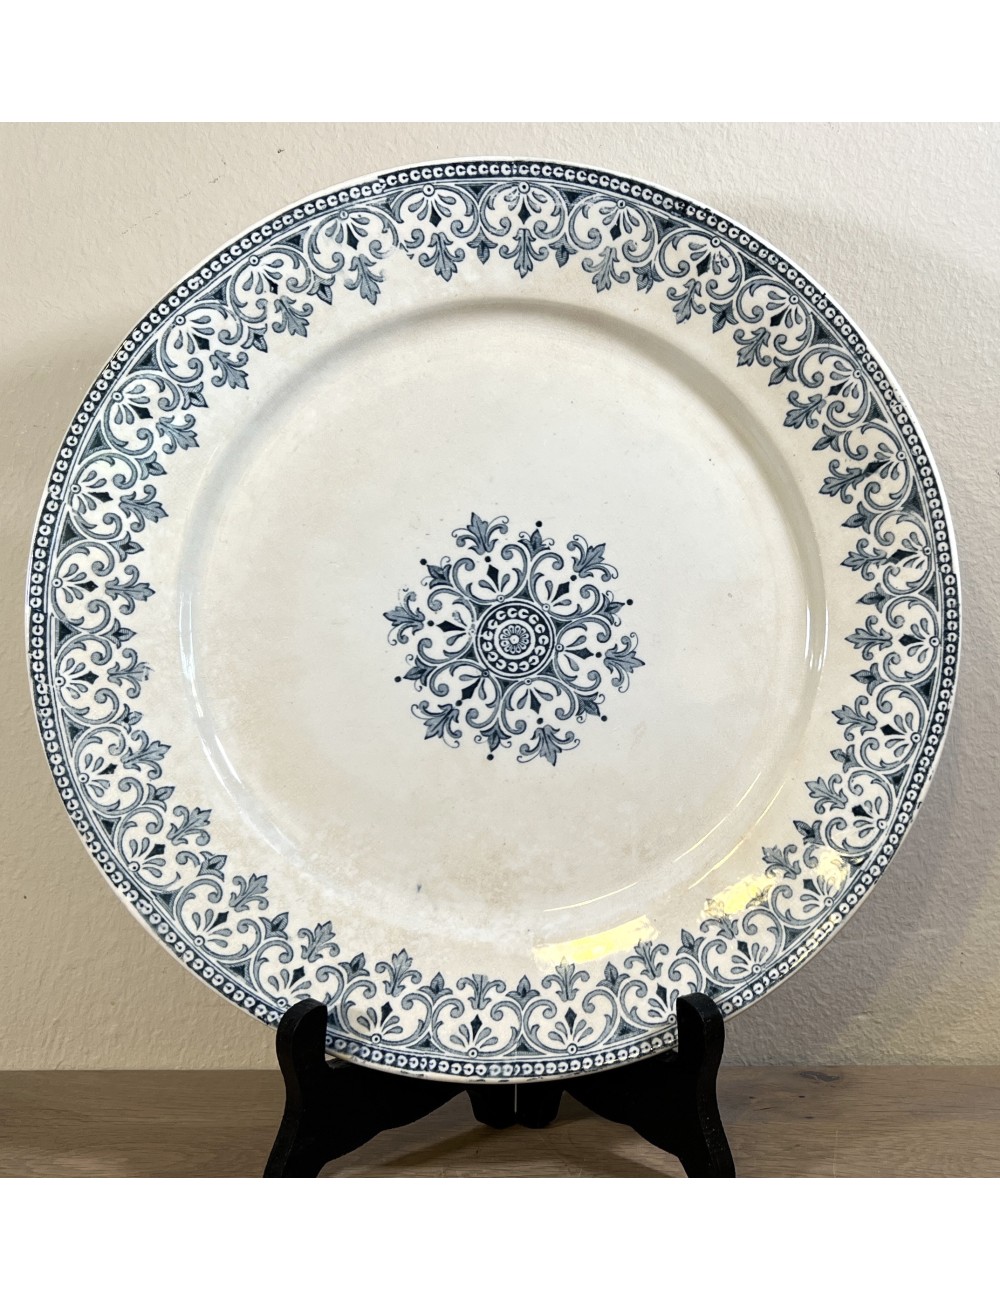 Dinner plate - FT Badonviller - décor ORIENTAL(?) executed in blue